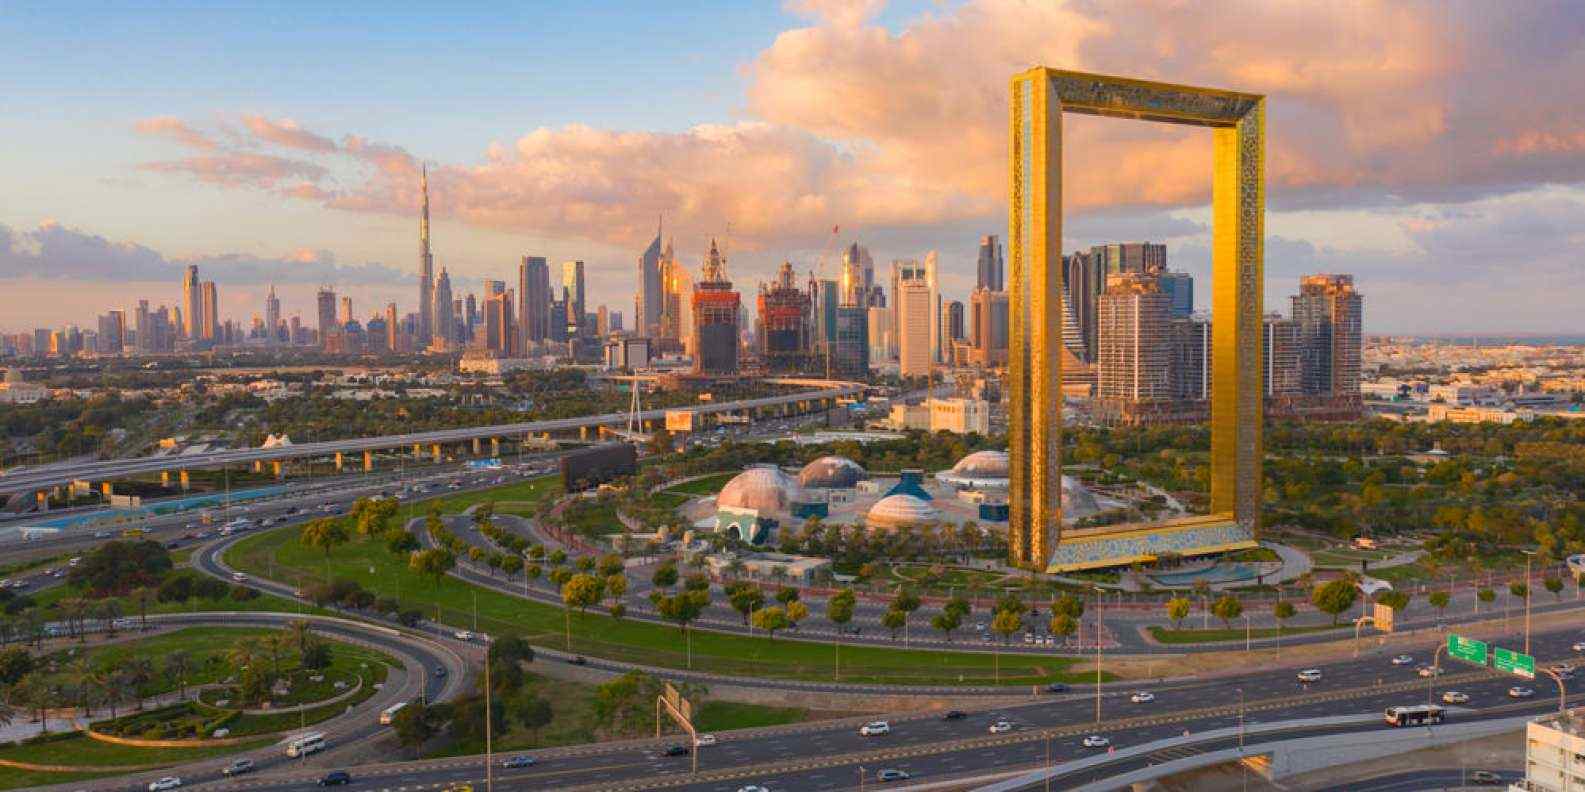 The world's most oversized frame of Dubai is 48 floors.